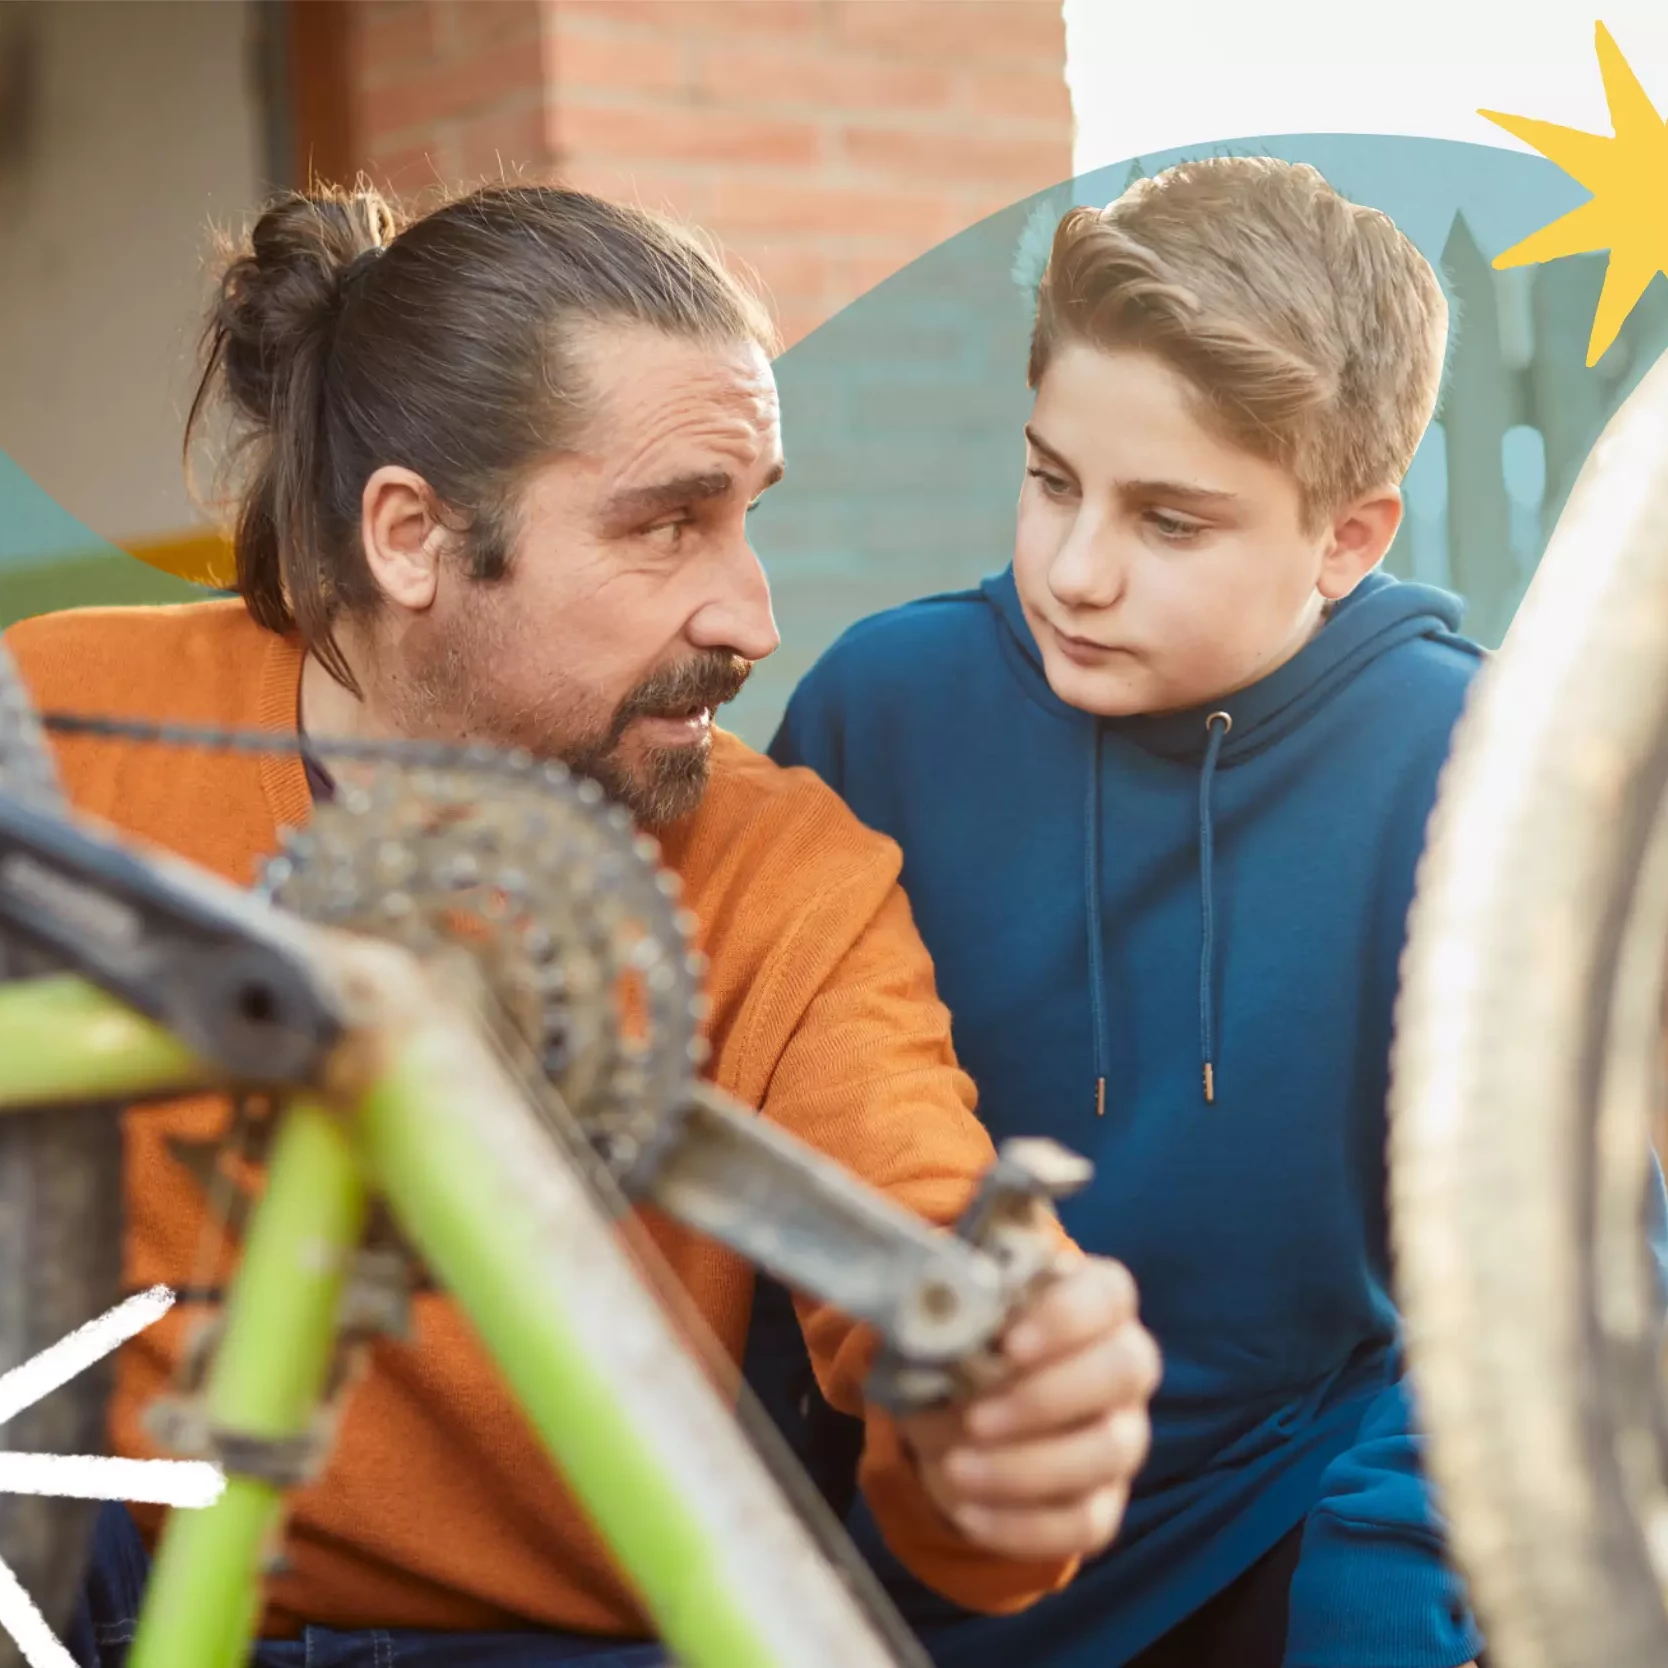 Dad looks toward his son as he teaches him how to fix a bike